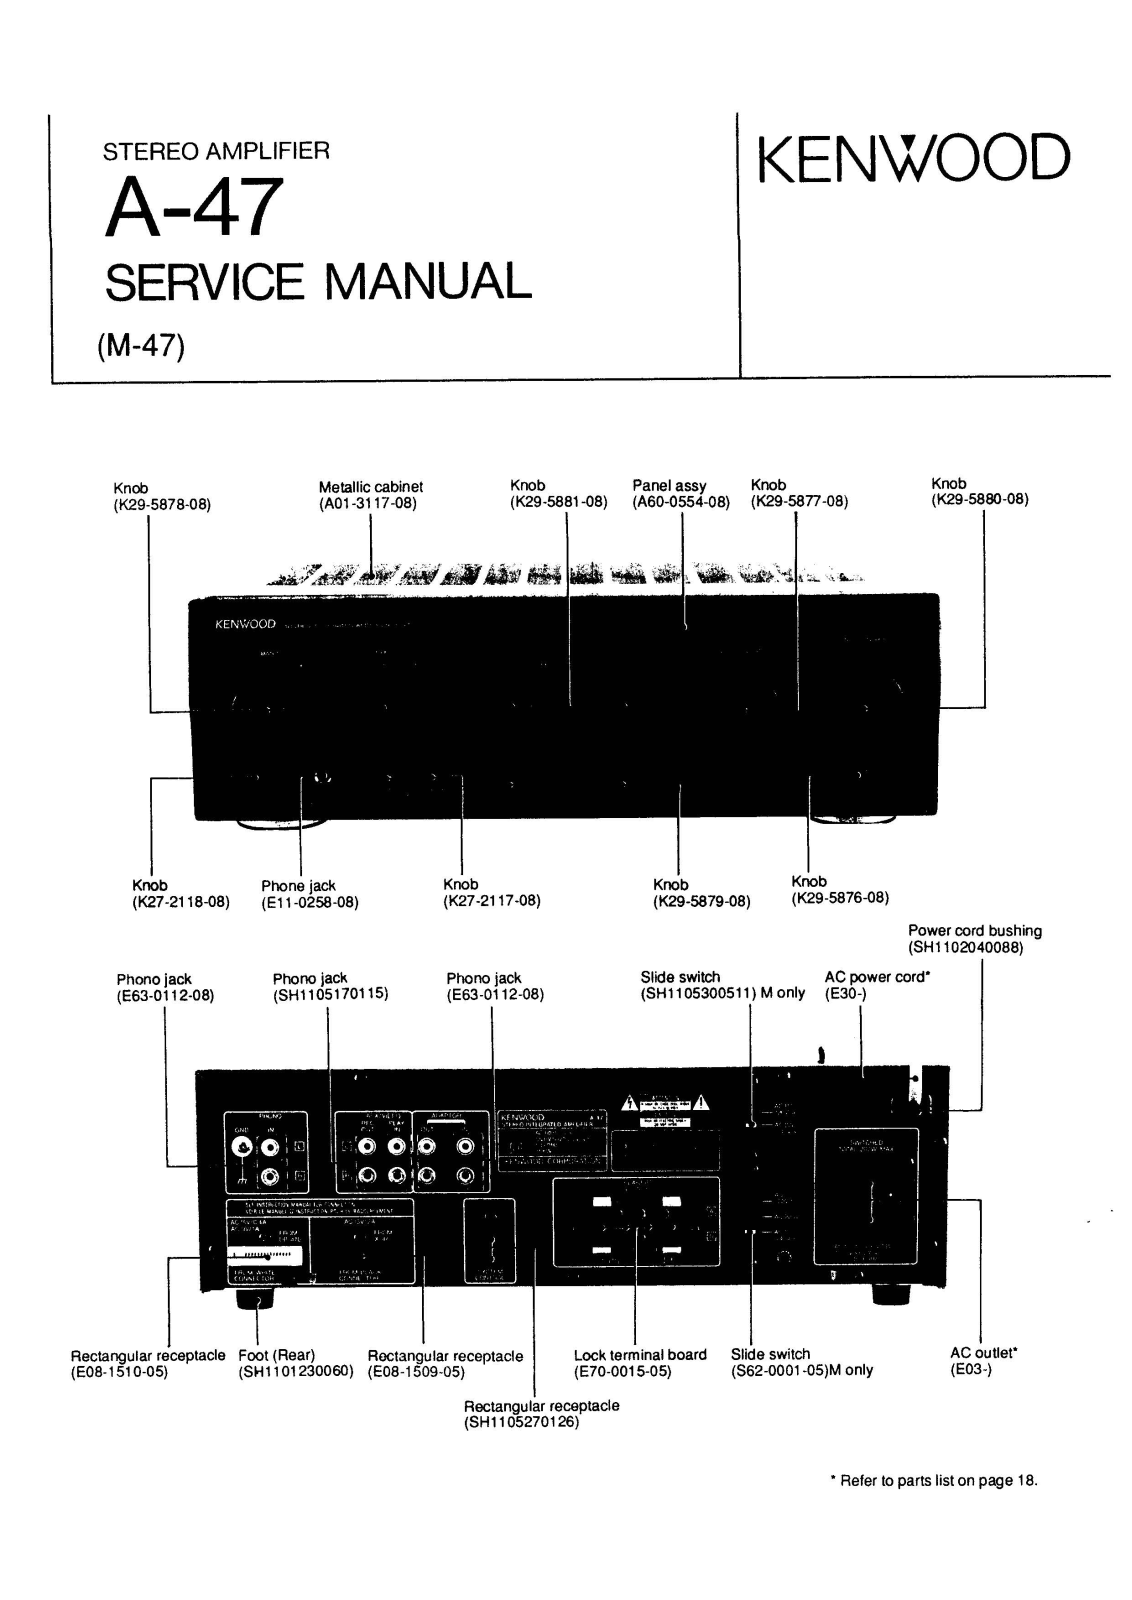 Kenwood A-47 Service Manual